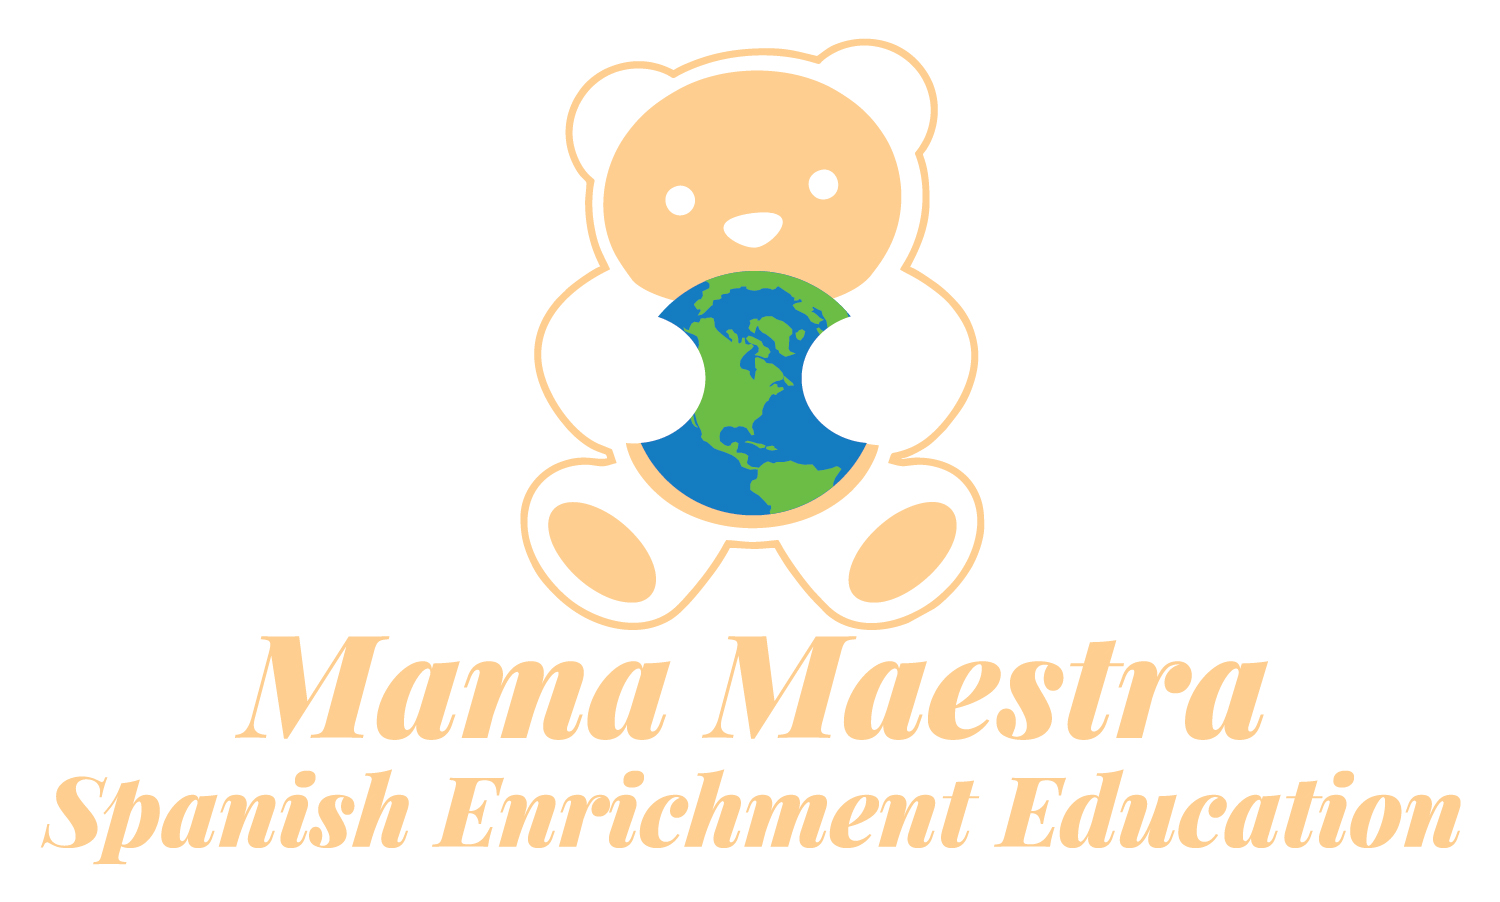 Mama Maestra Spanish Enrichment Education 